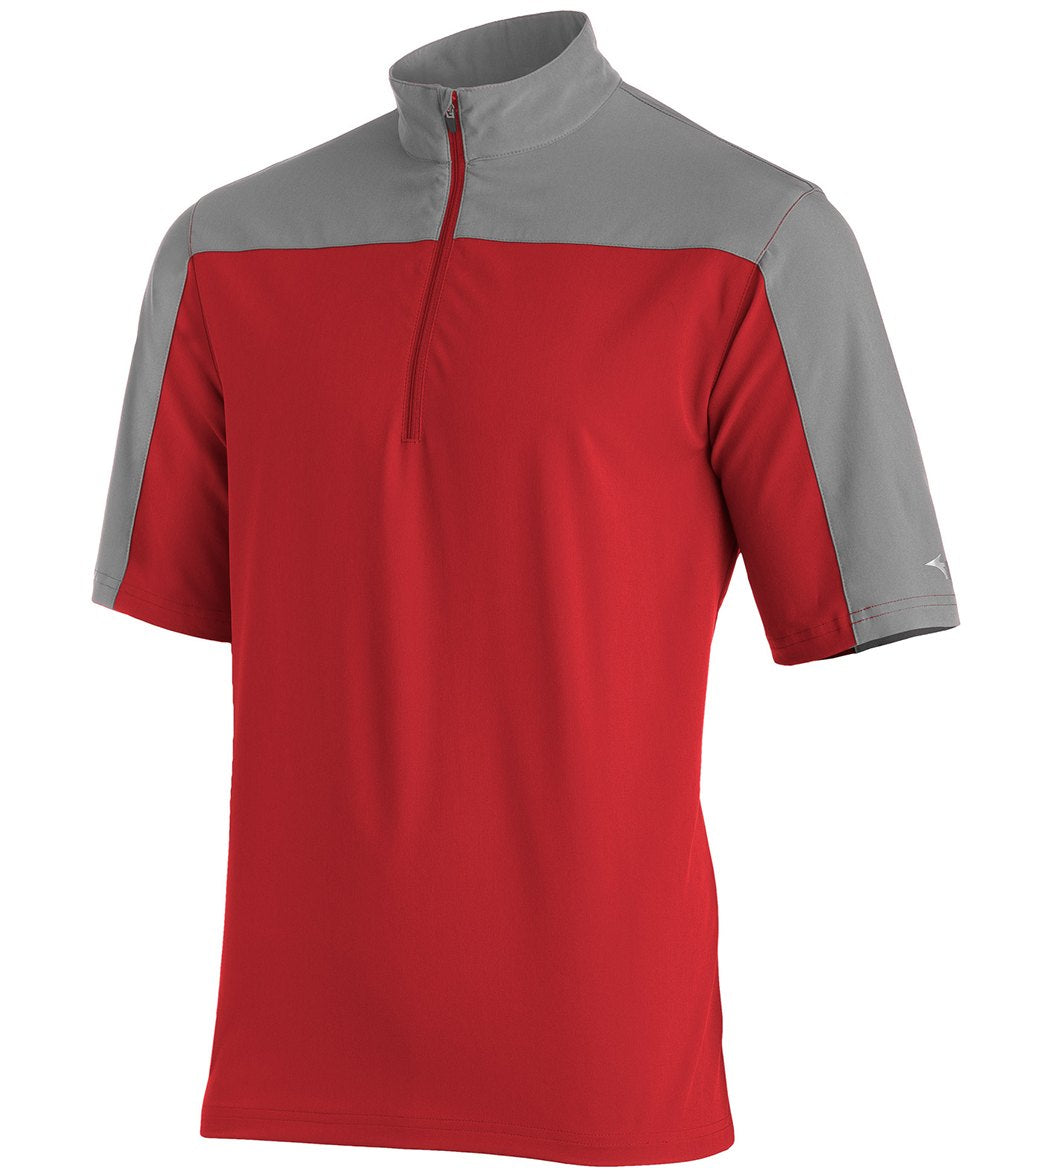 Mizuno Men's Comp Short Sleeve Batting Jacket - Red-Grey Large Red/Grey - Swimoutlet.com